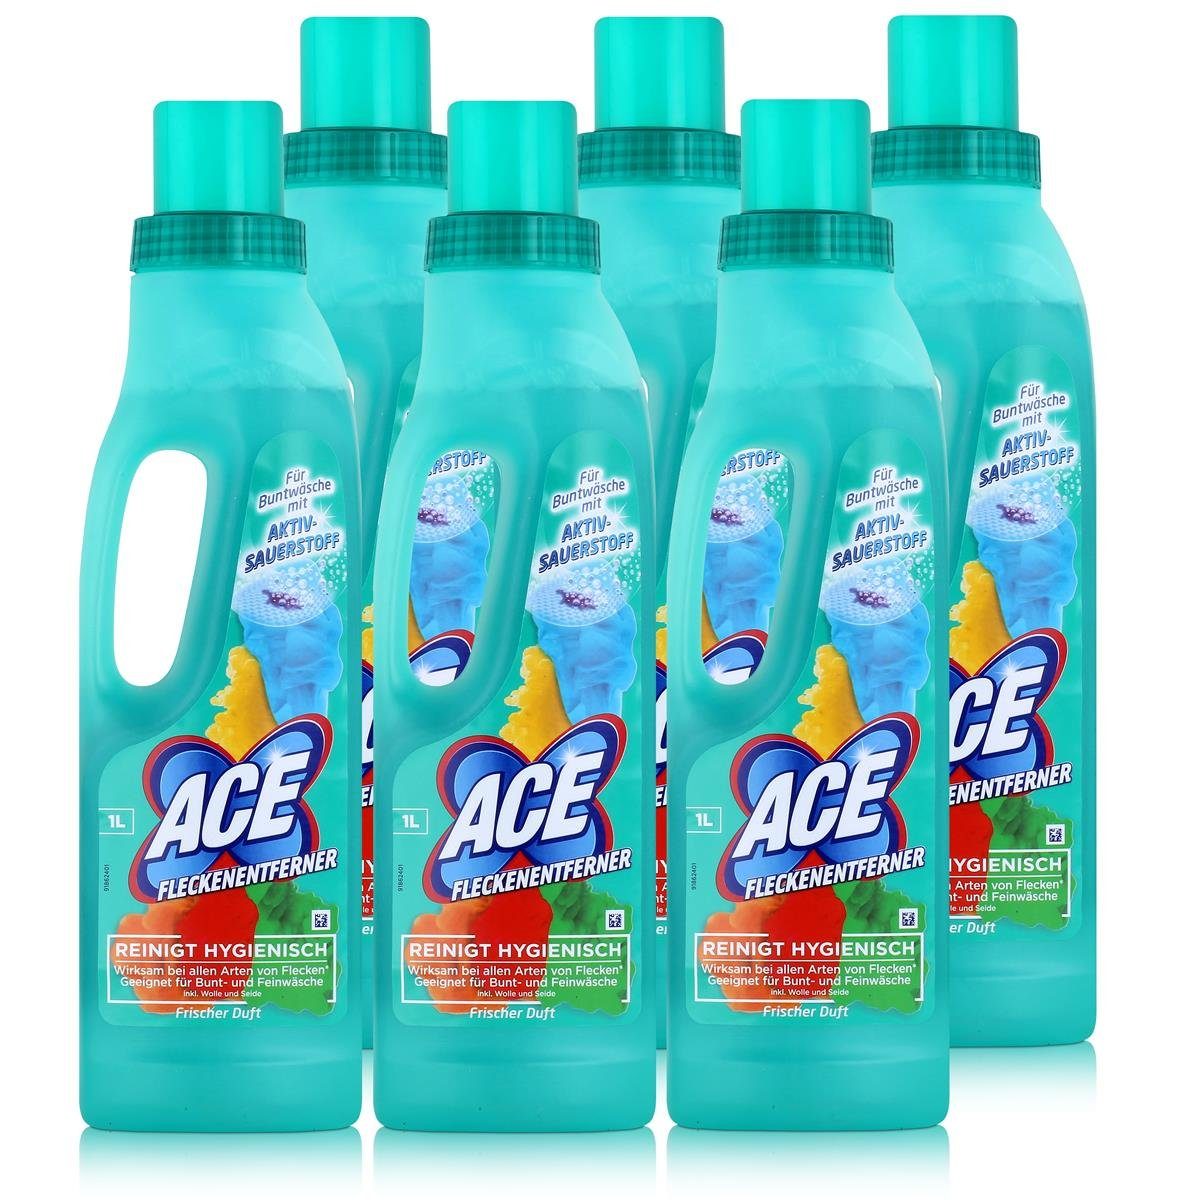 ACE ACE Fleckenentferner Frische Duft 1L - Reinigt Hygienisch (6er Pack) Fleckentferner